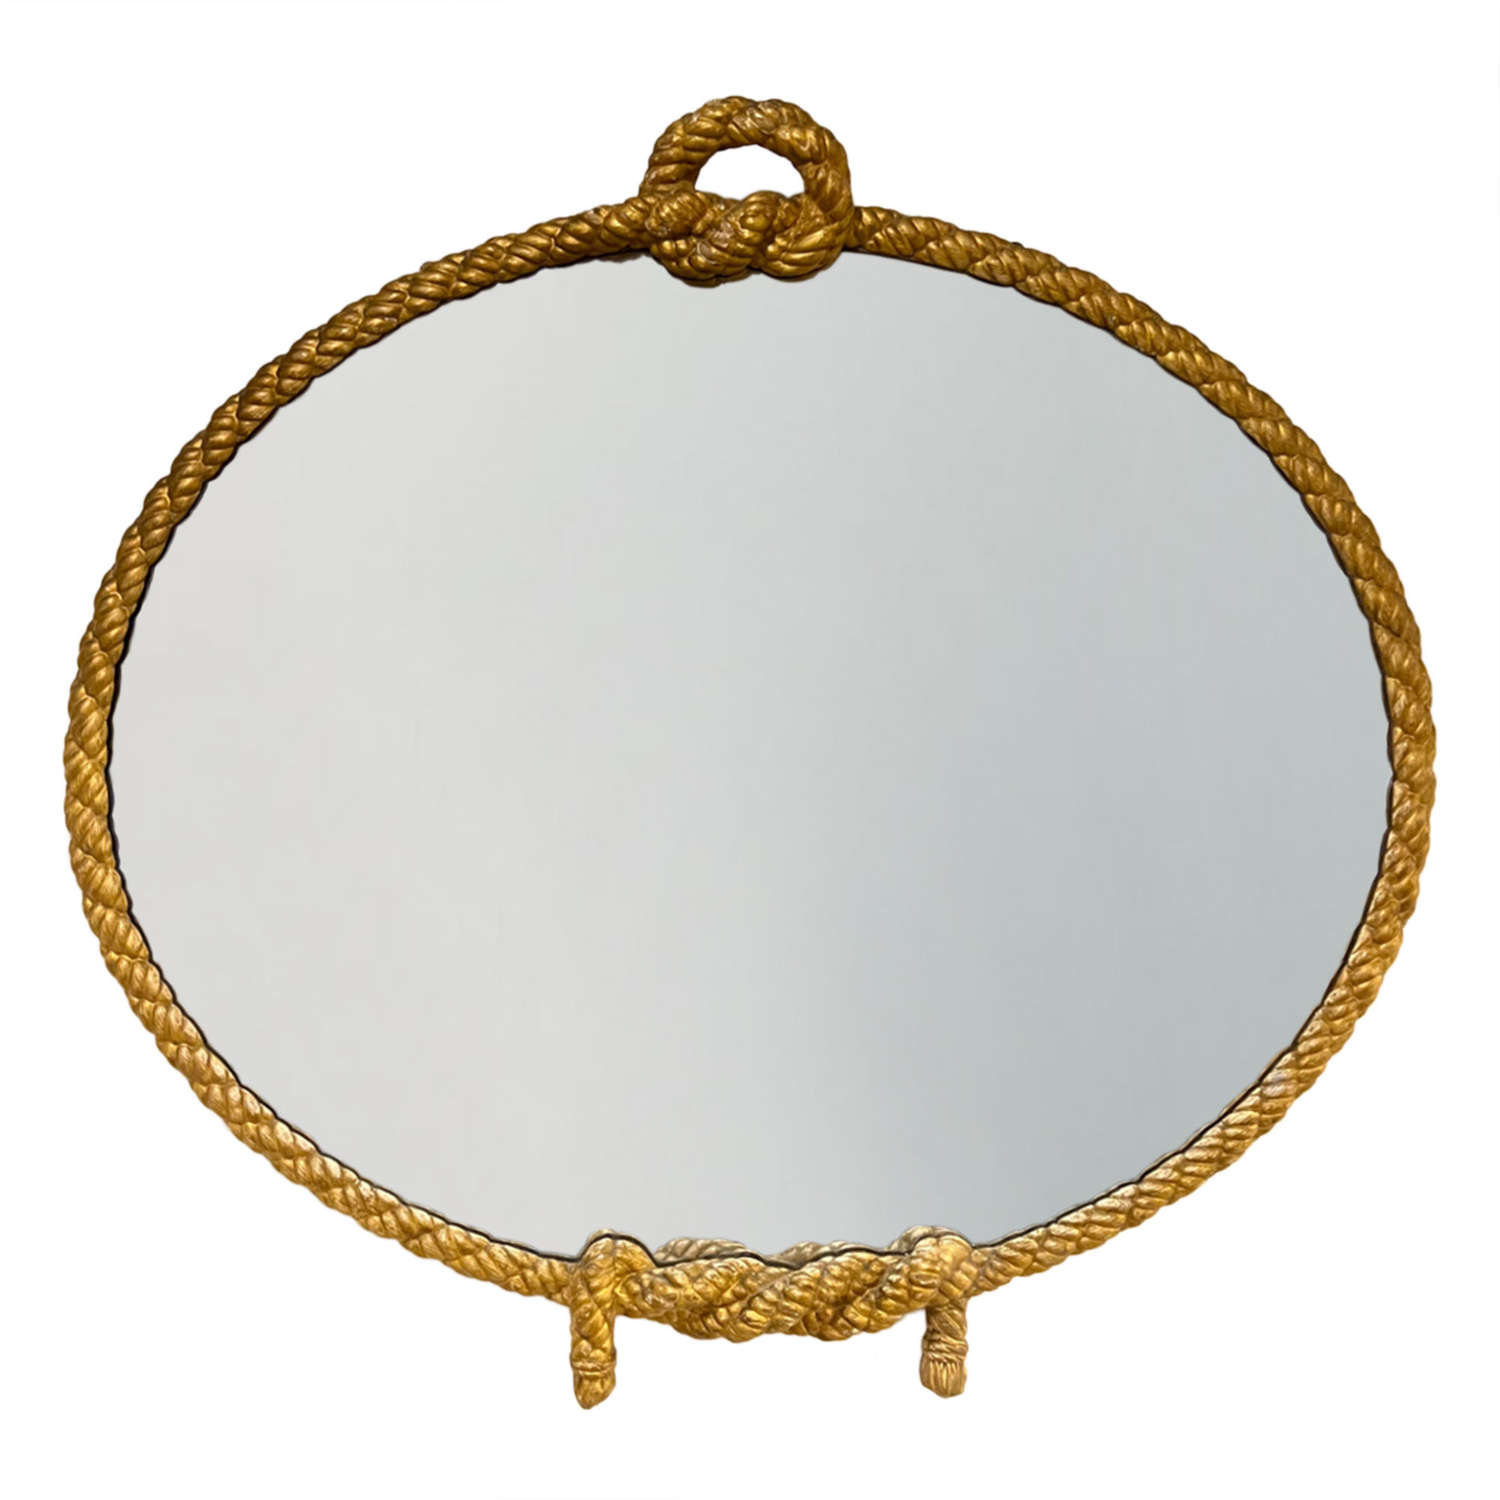 19th Century Giltwood Rope Twist Mirror With Original Mercury Glass